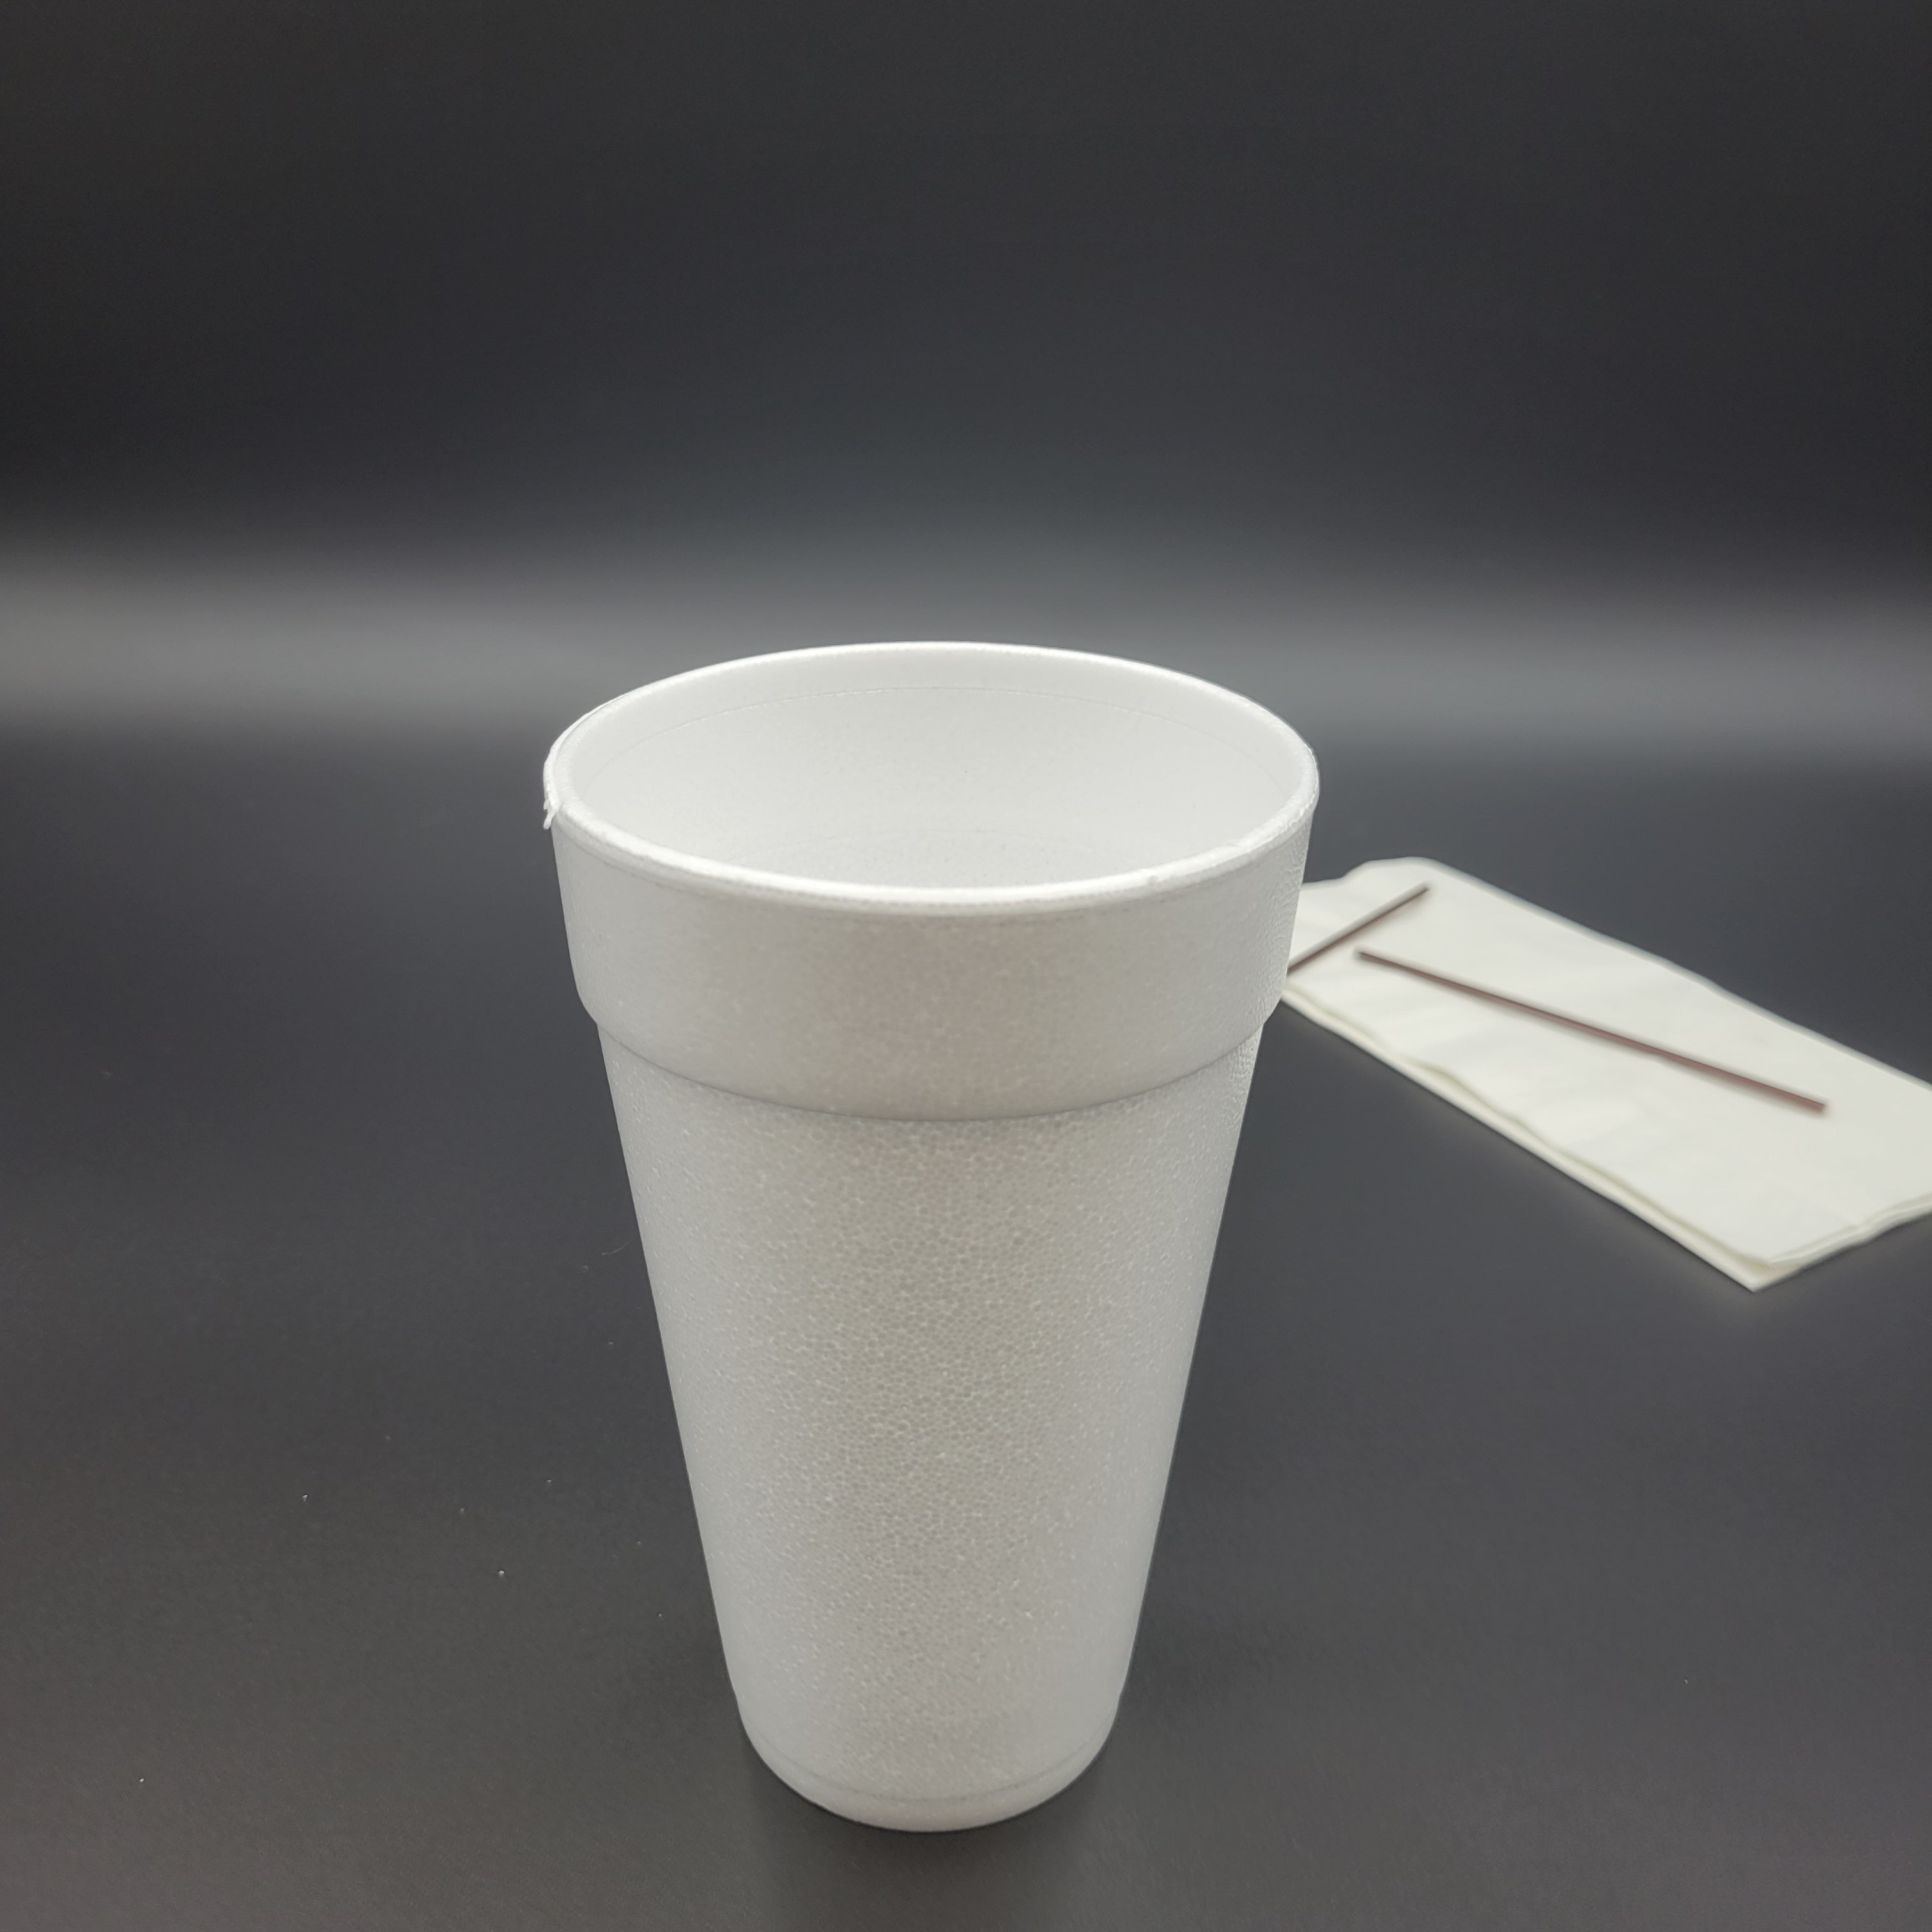 Dart Mfg. White Foam Cup 20 oz. 20J16 - 500/Case